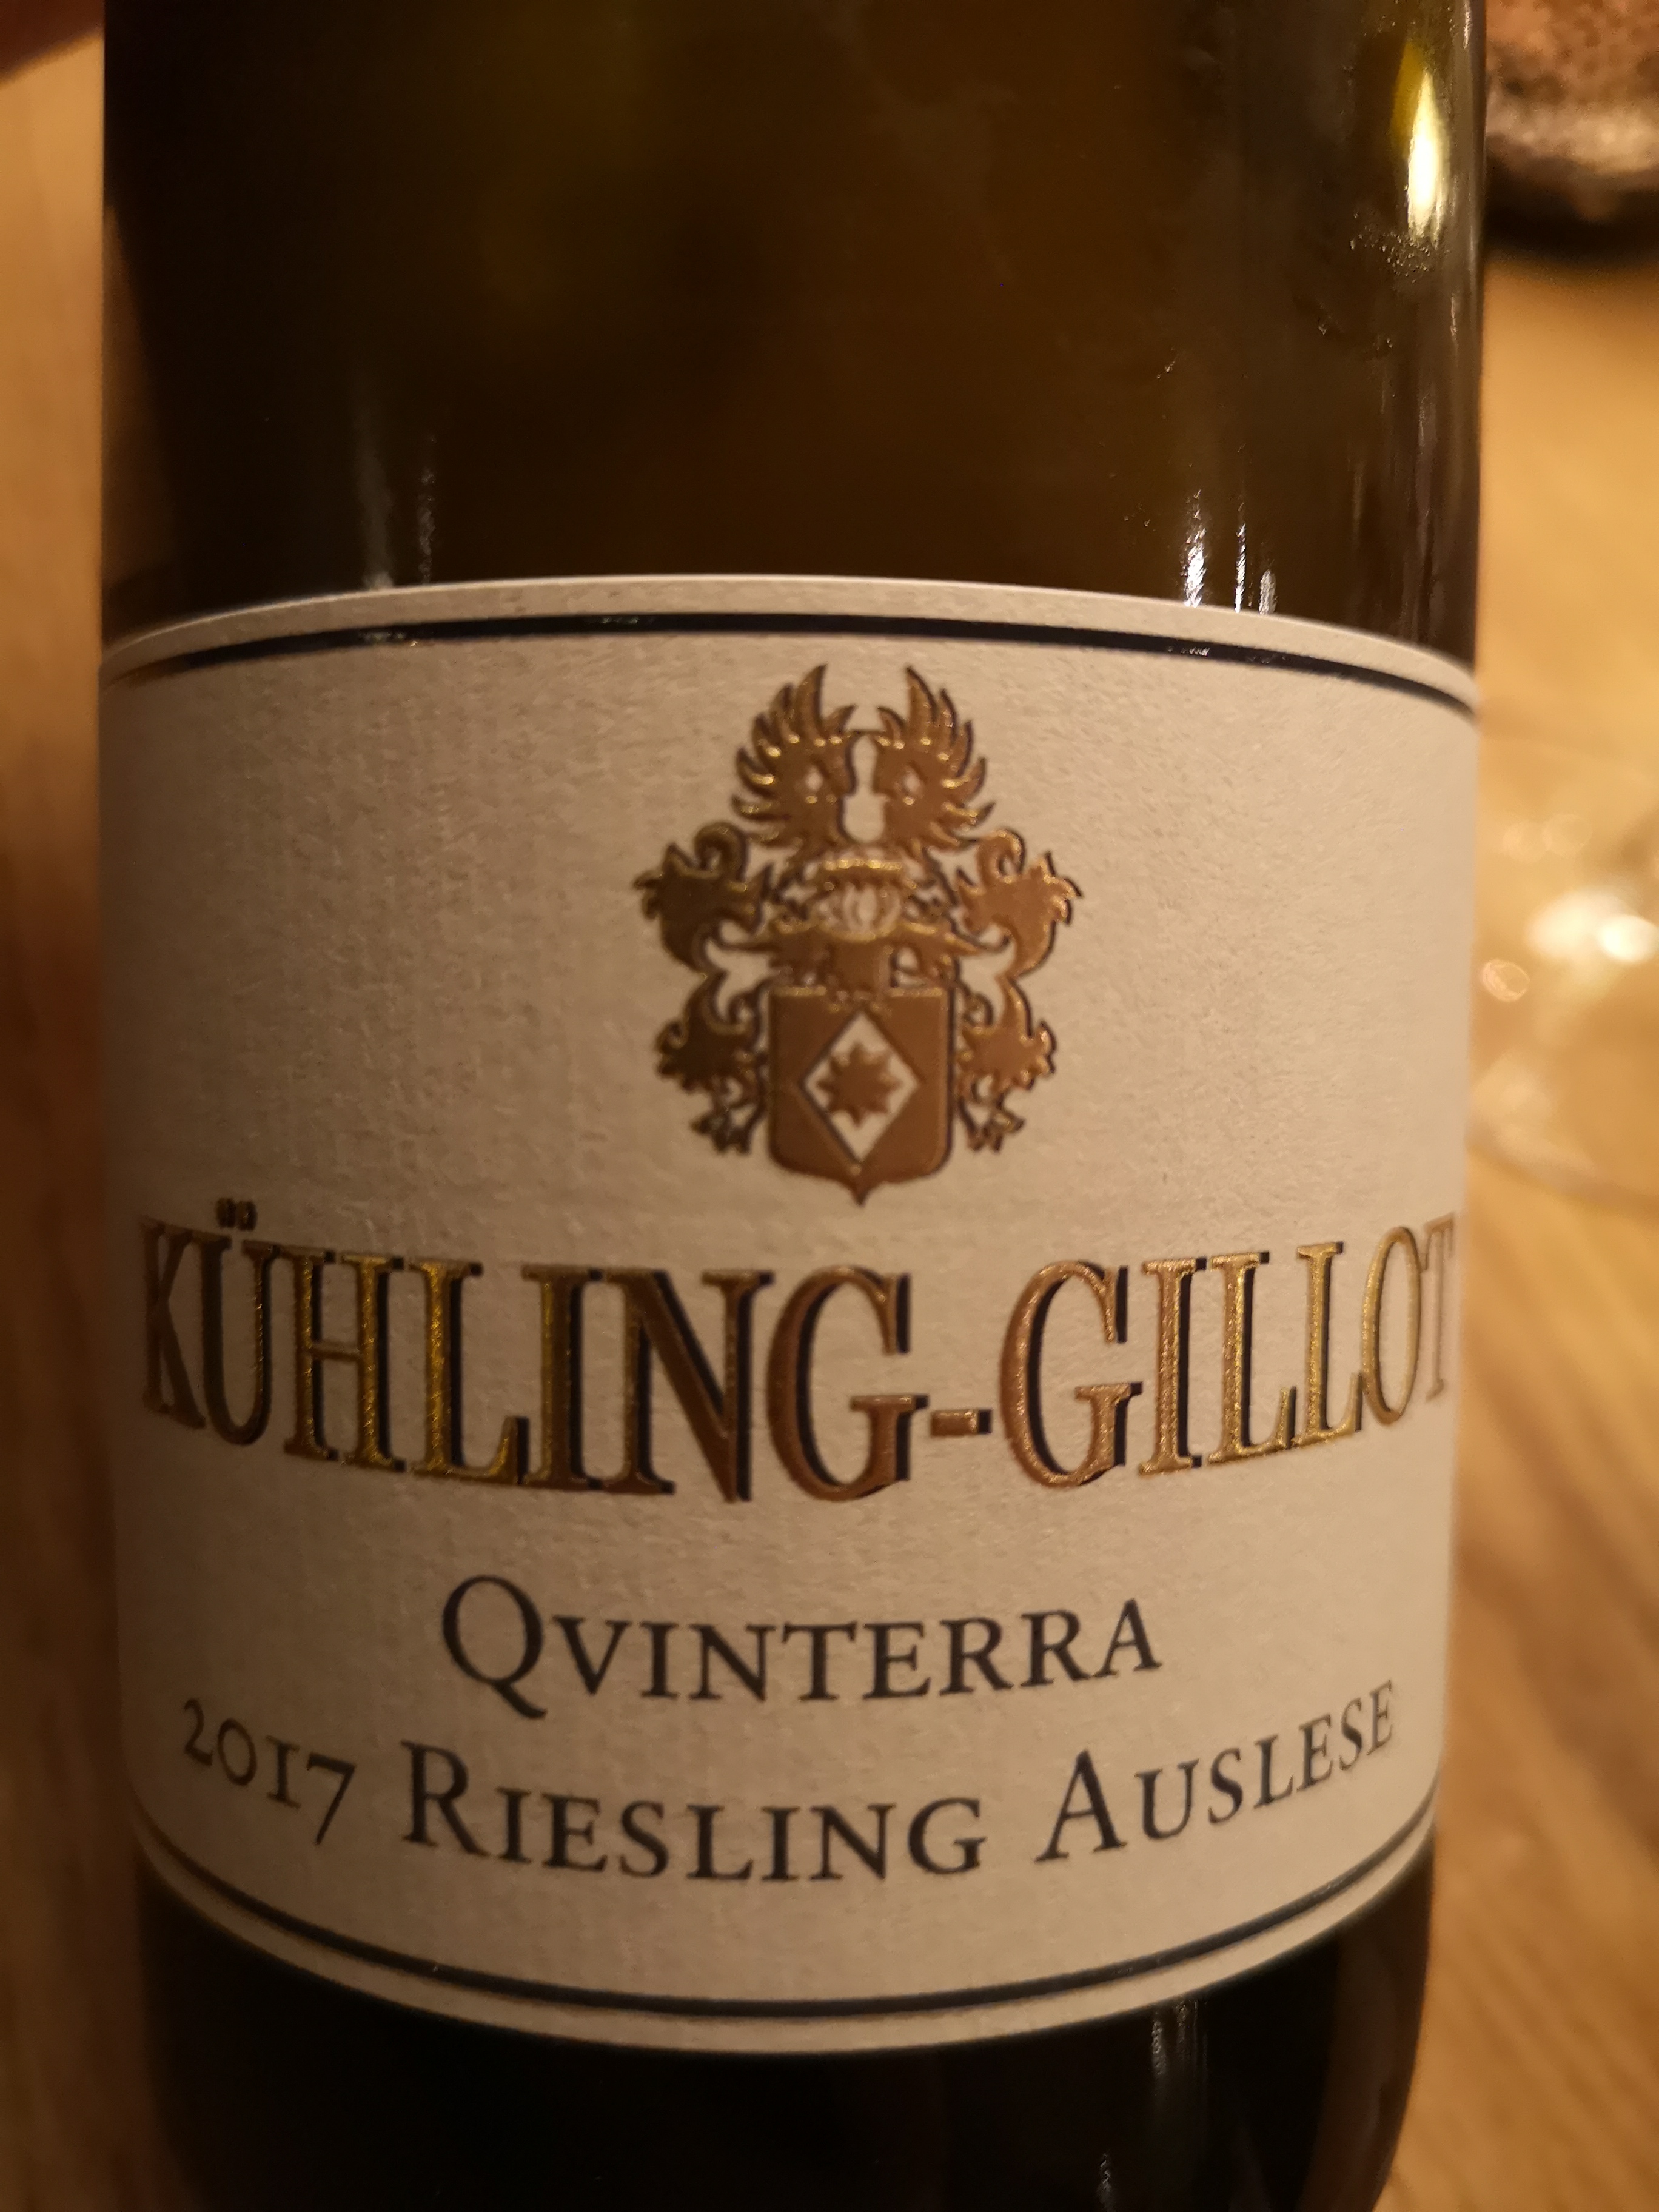 2017 Riesling Auslese Qvinterra | Kühling-Gillot